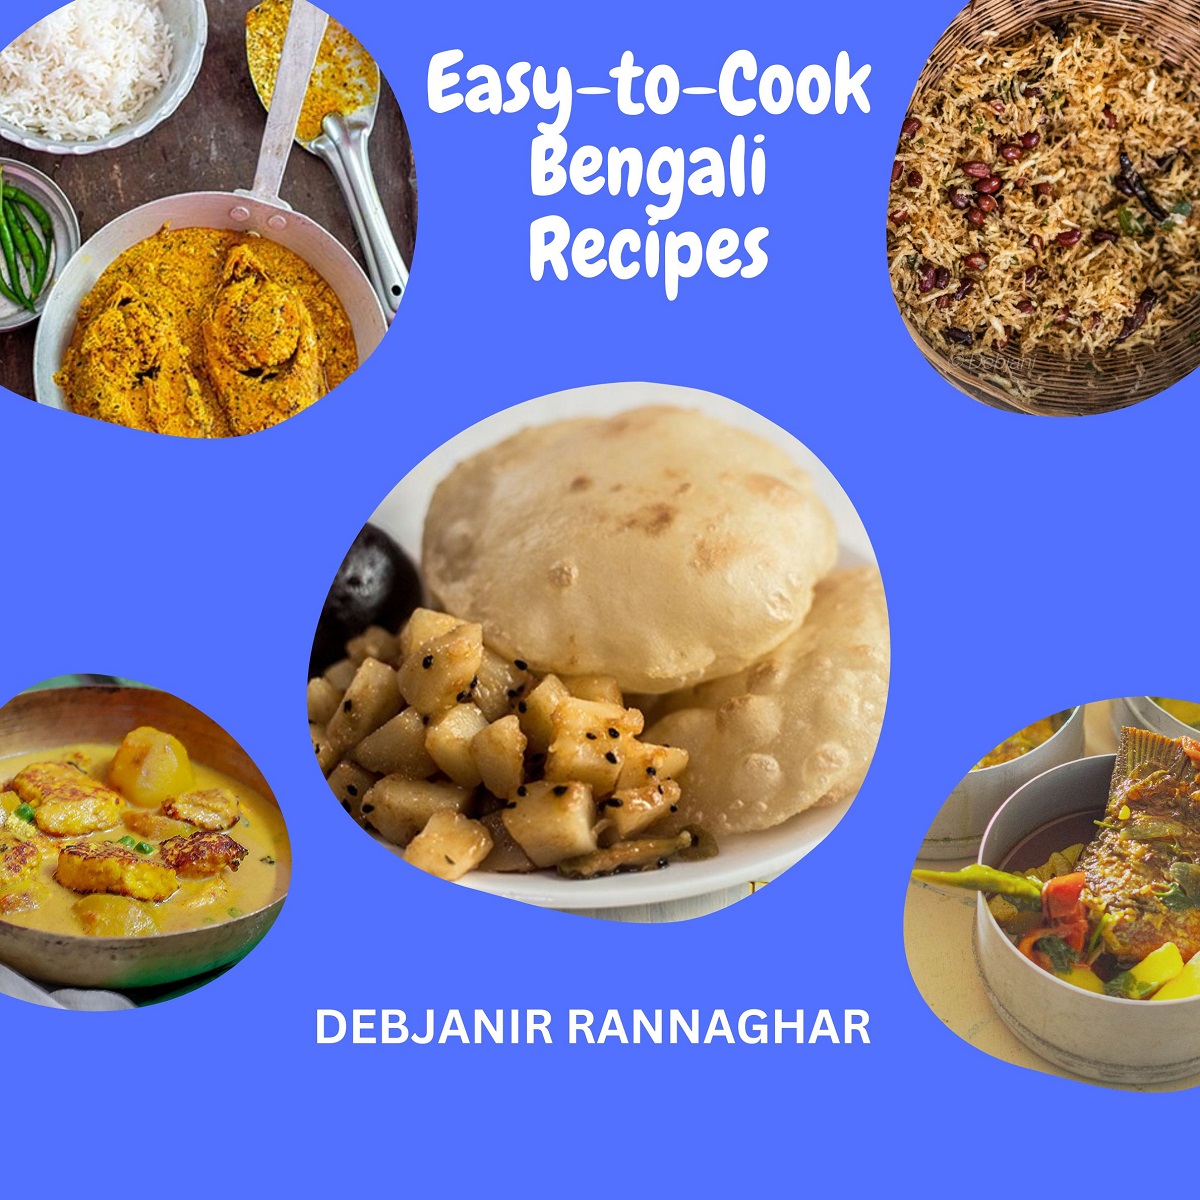 %Easy bengali recipe collection debjanir rannaghar